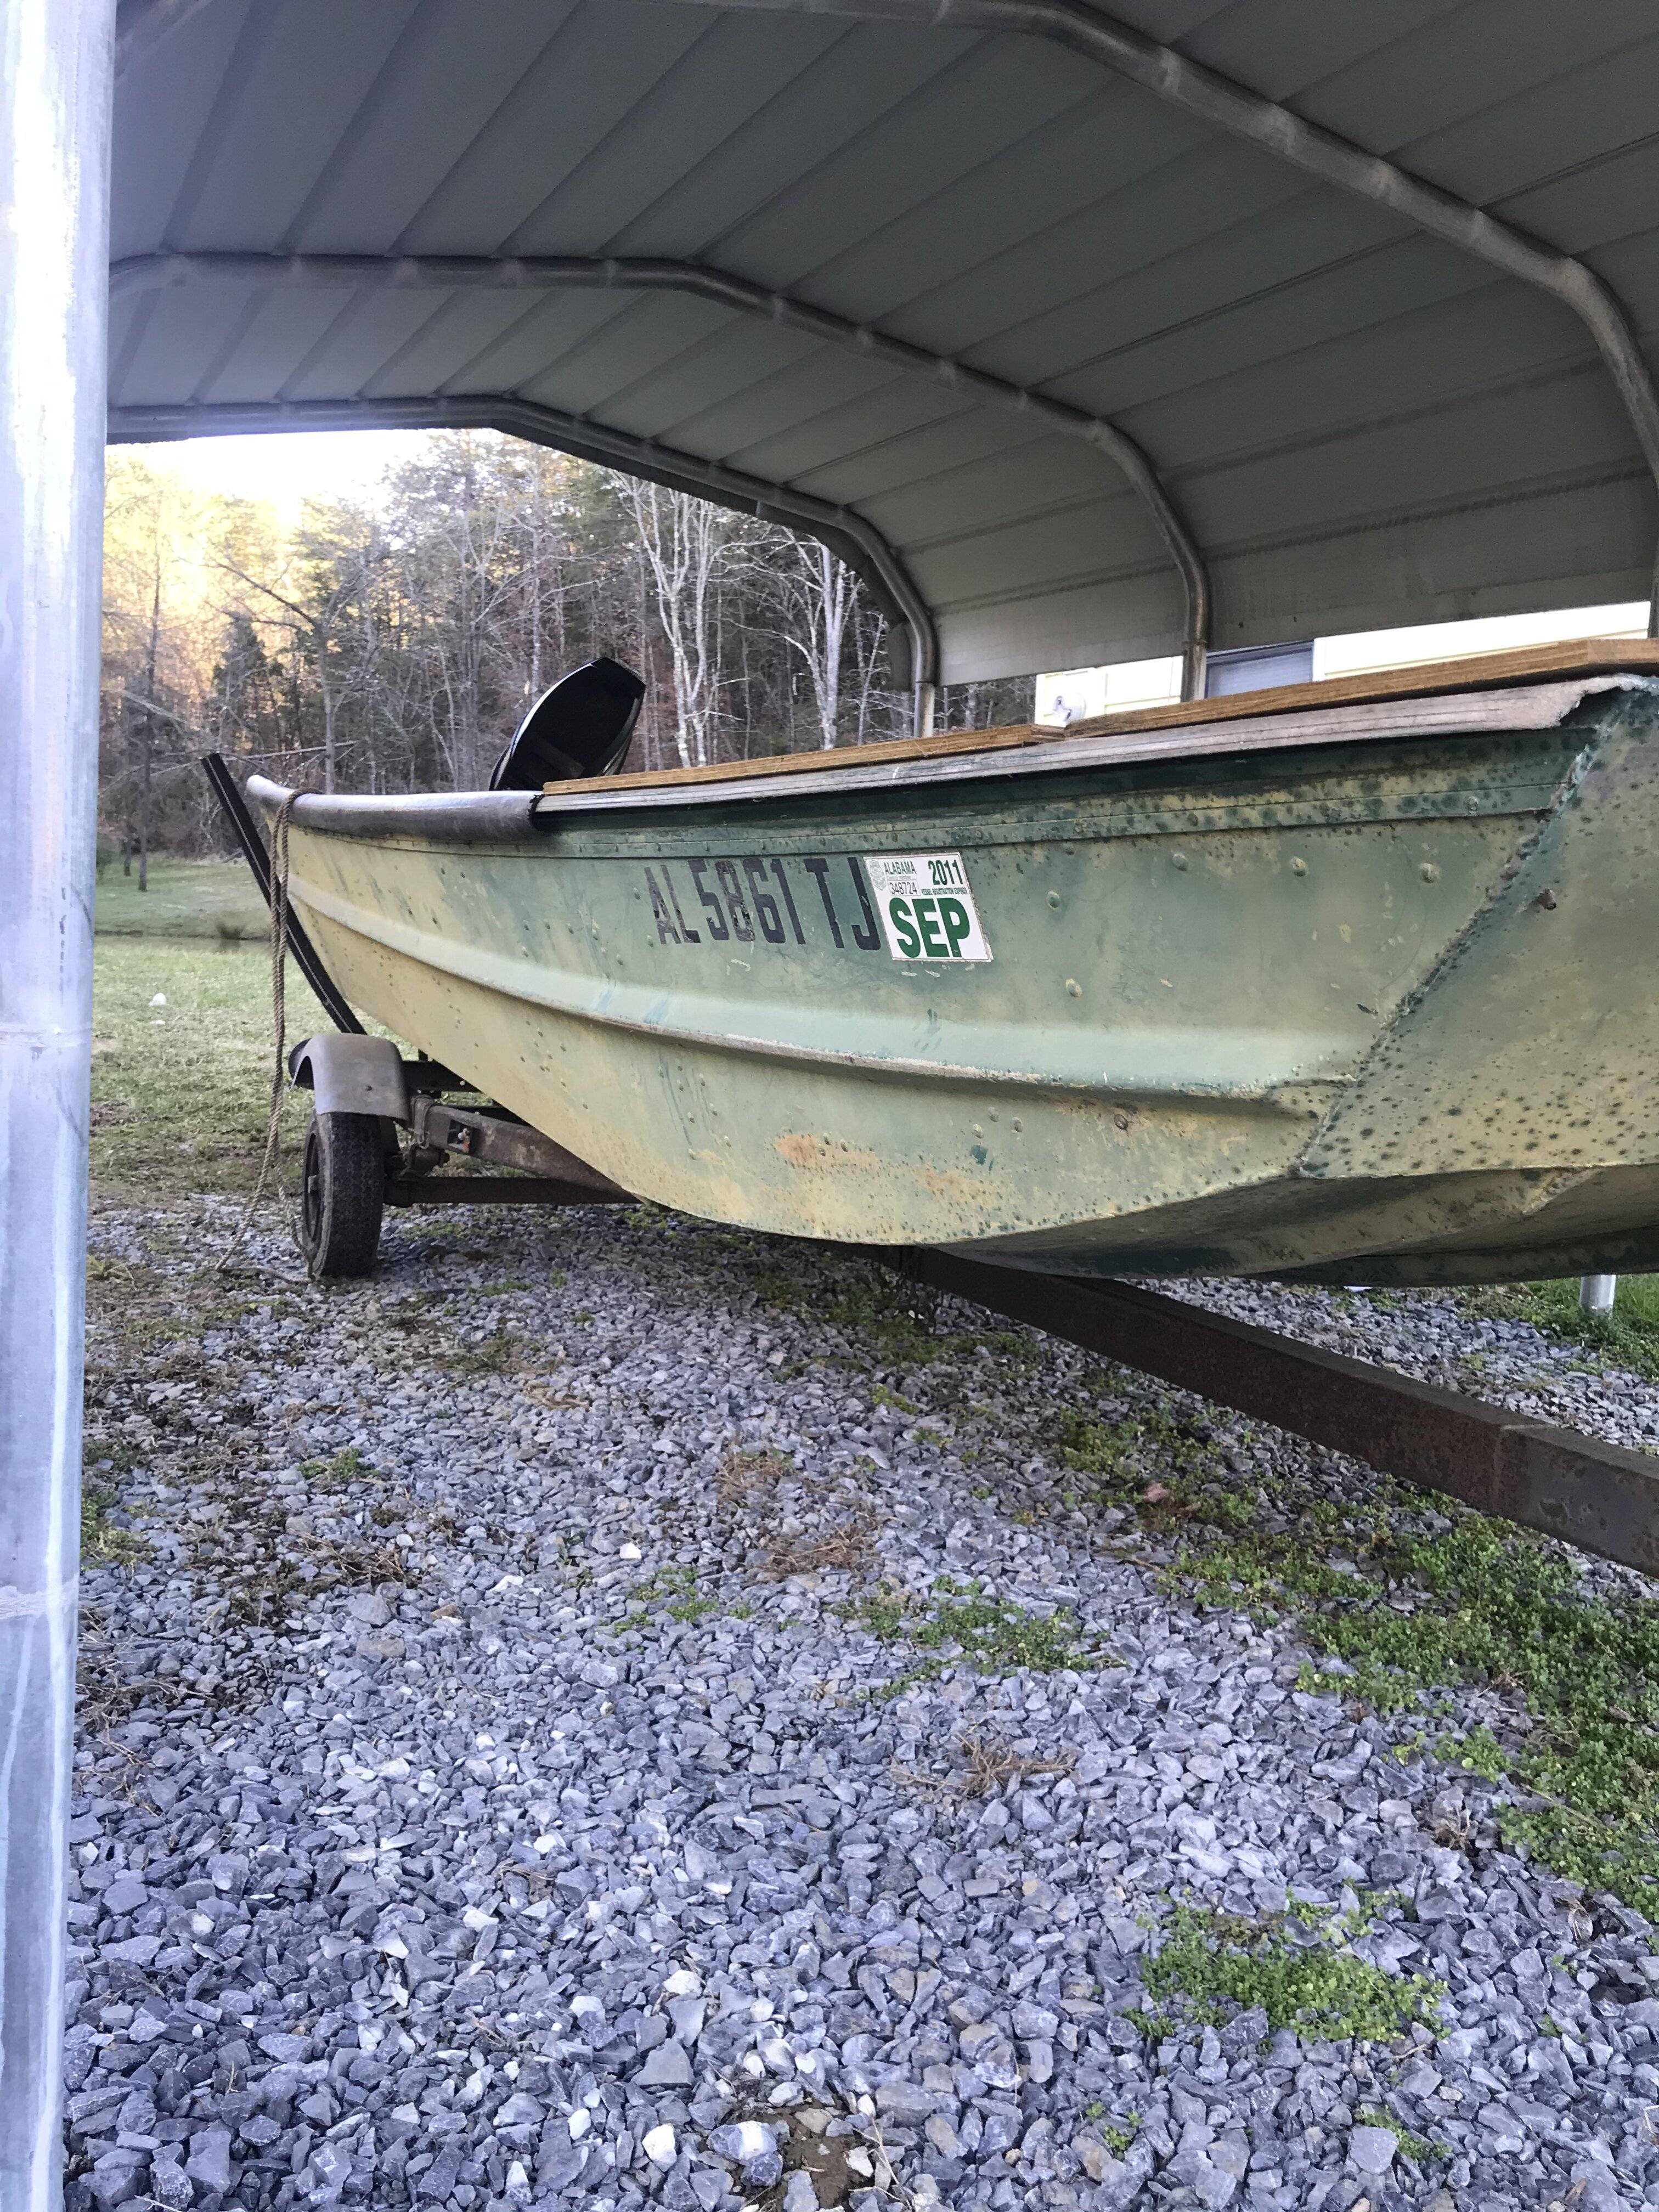 10ft Jon boat.  Tennessee Hunting & Fishing Forum